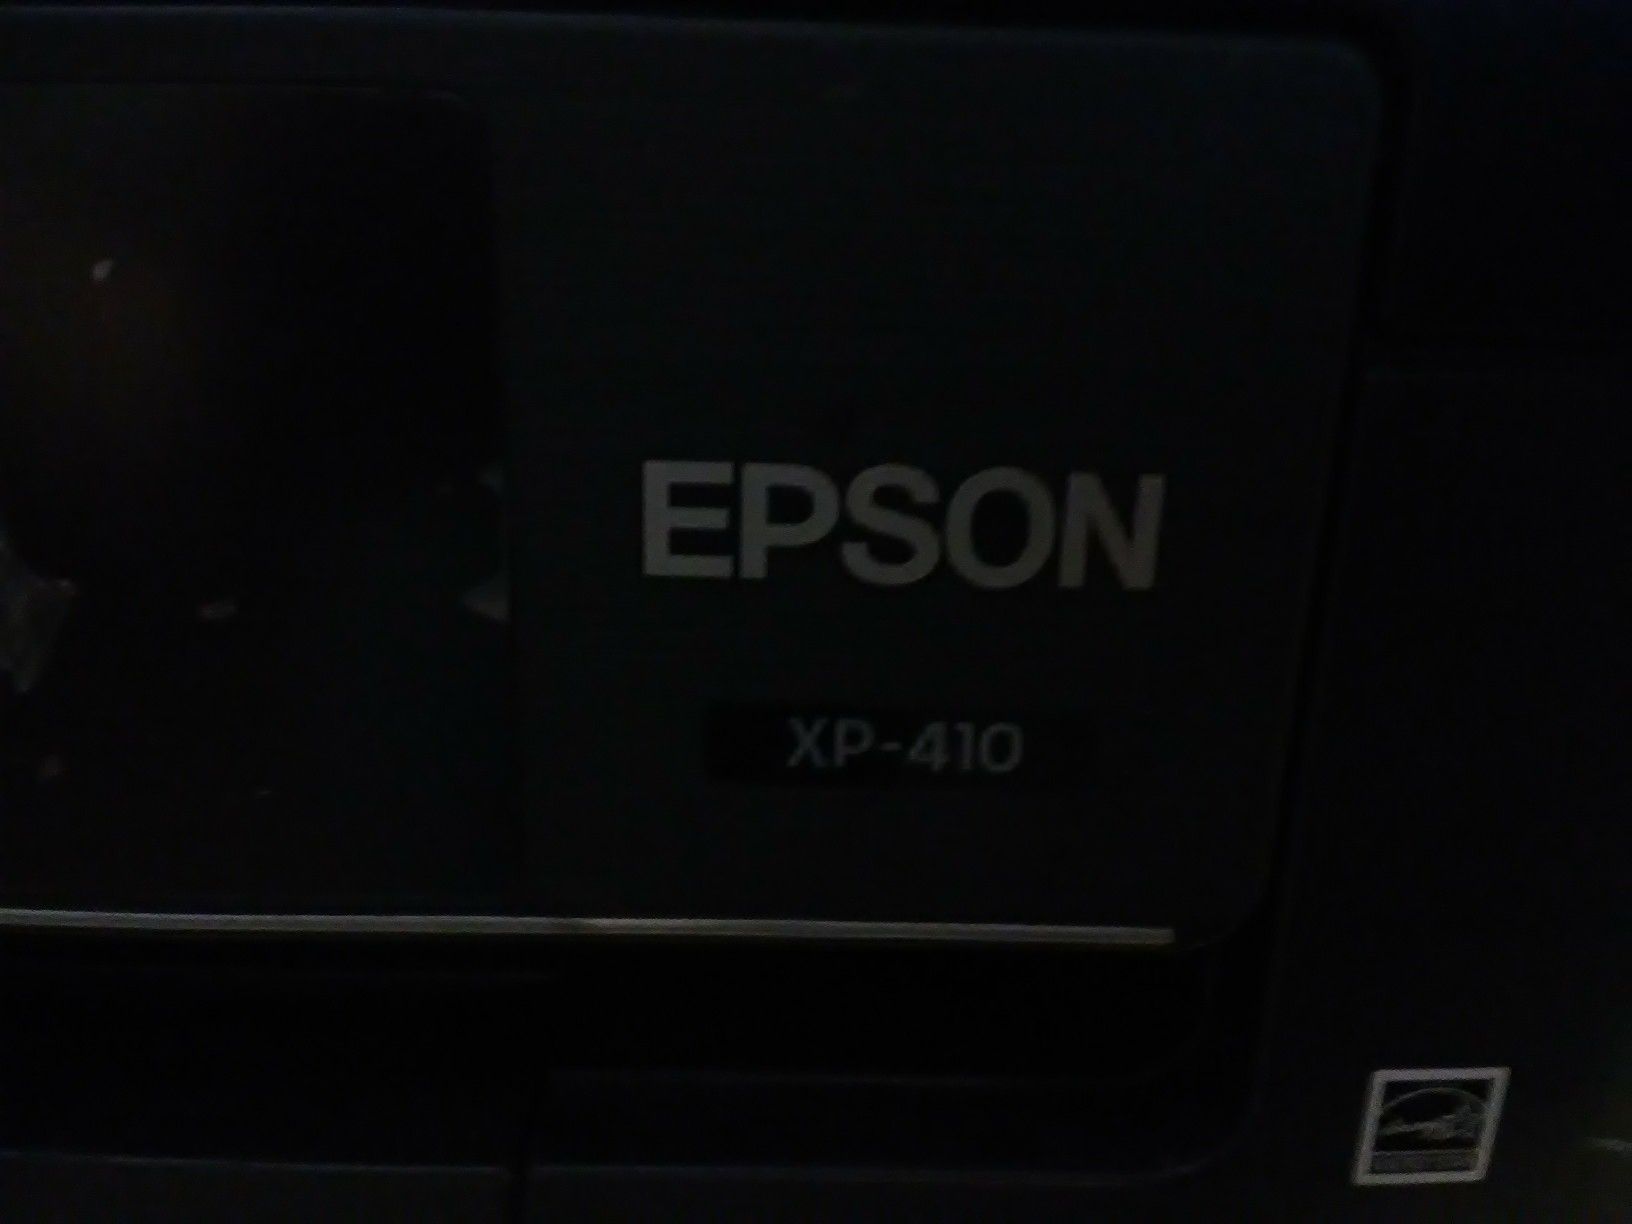 Epson color printer